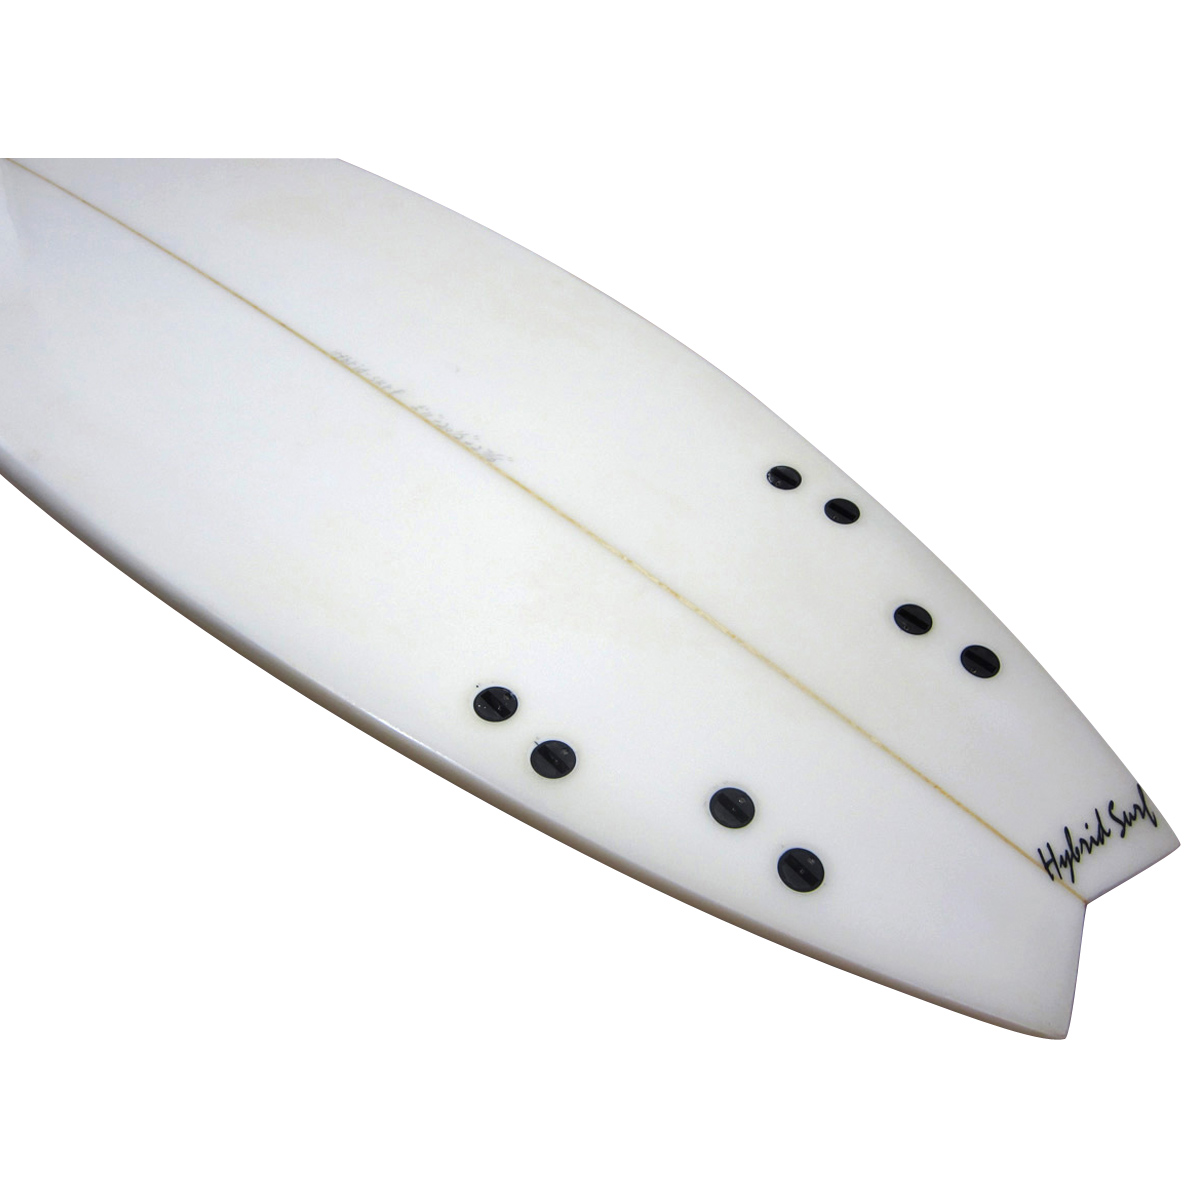 HYBRID SURF / Quad Swallow 5'11